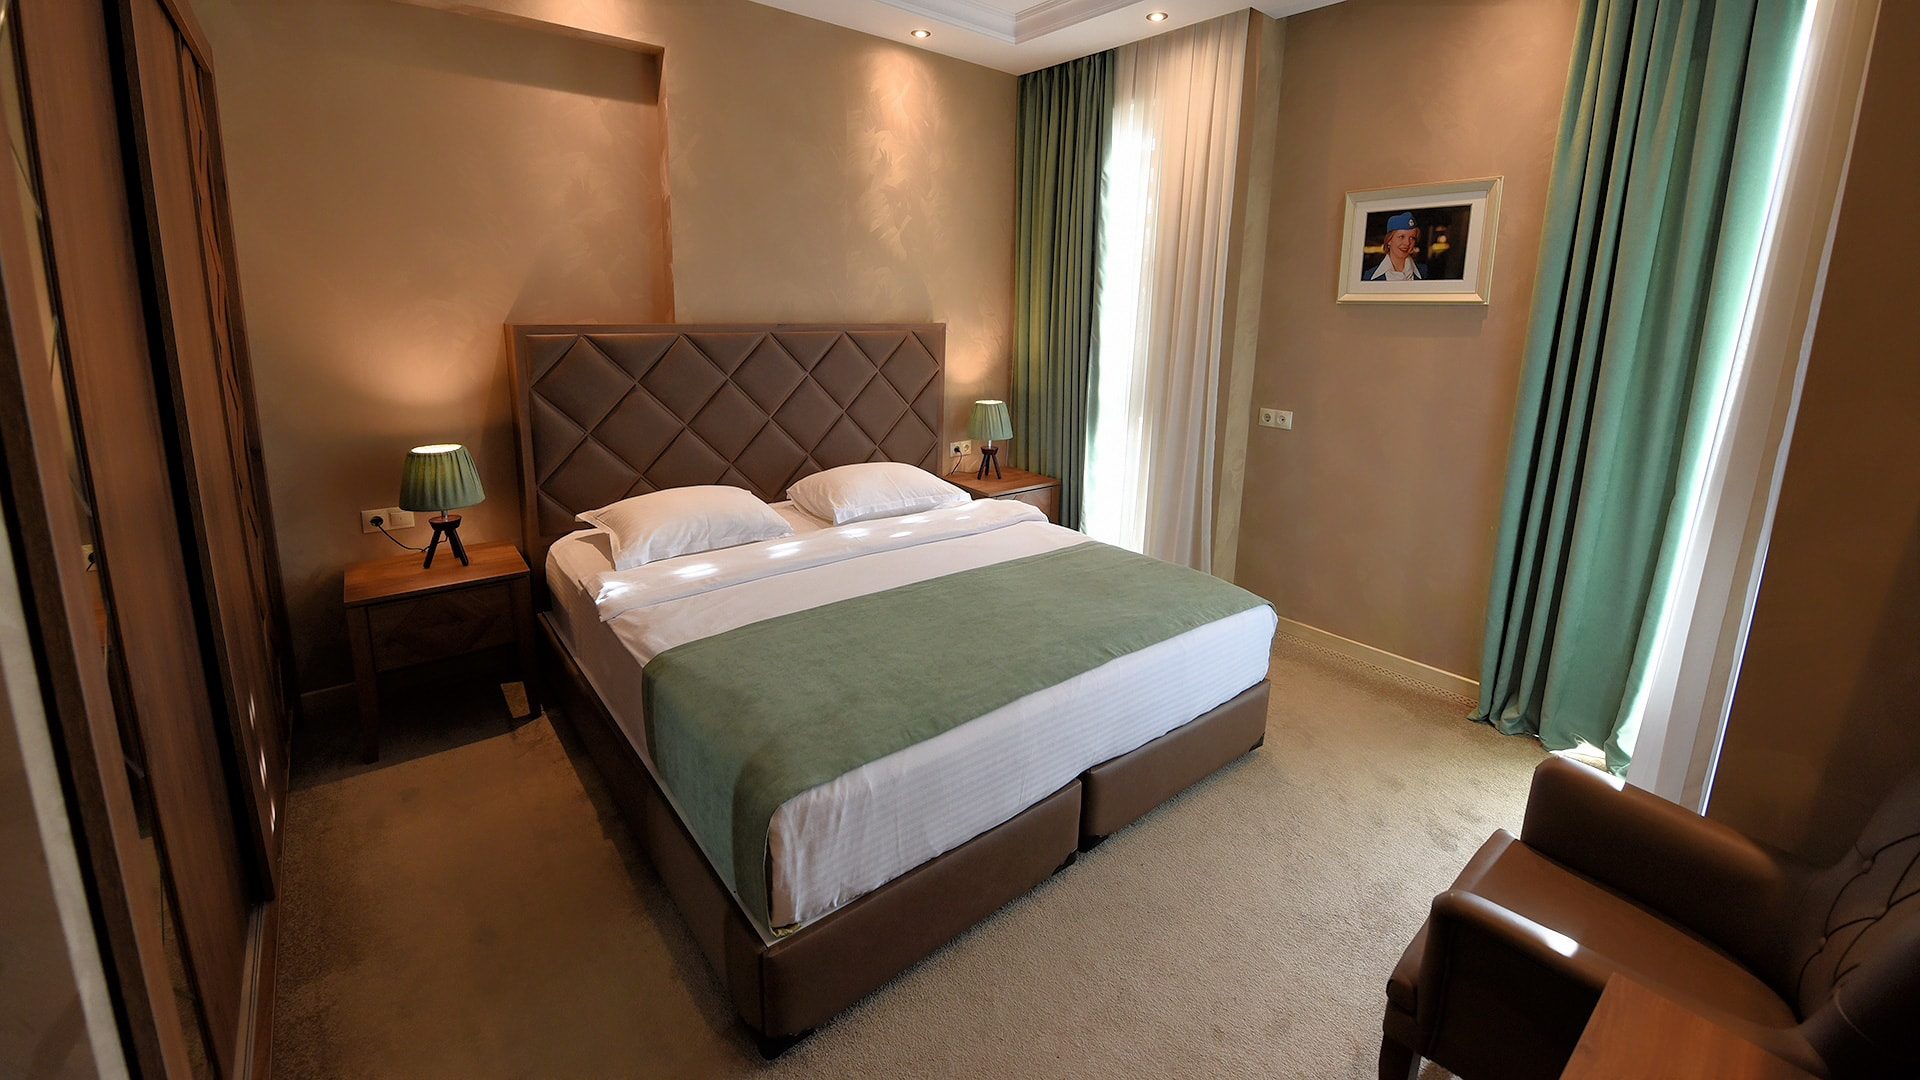 Standart room of the Grand hotel ''Mimino''